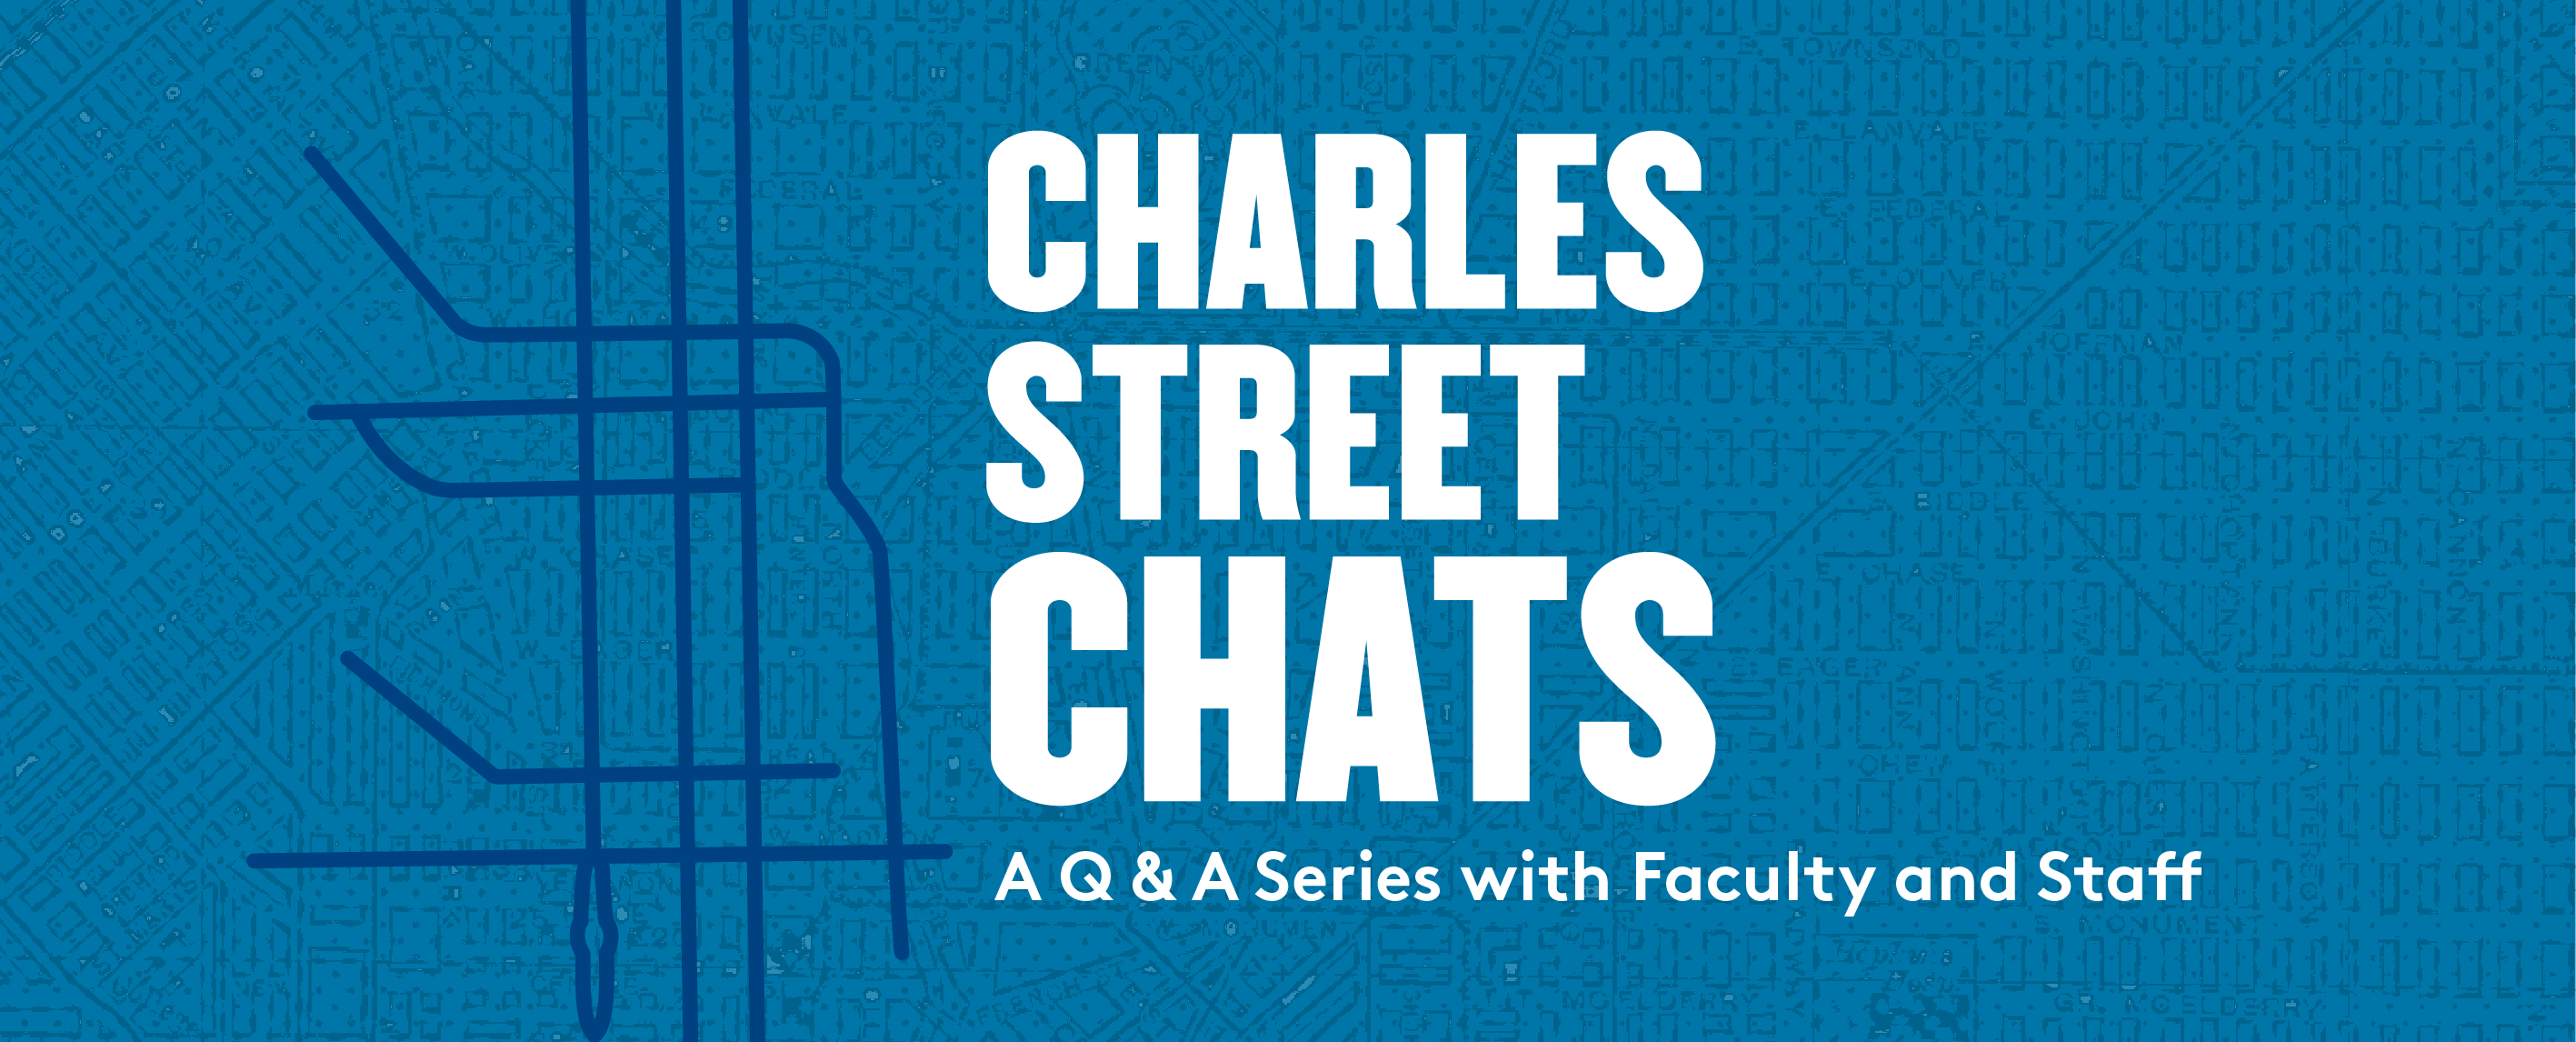 Charles Street Chats